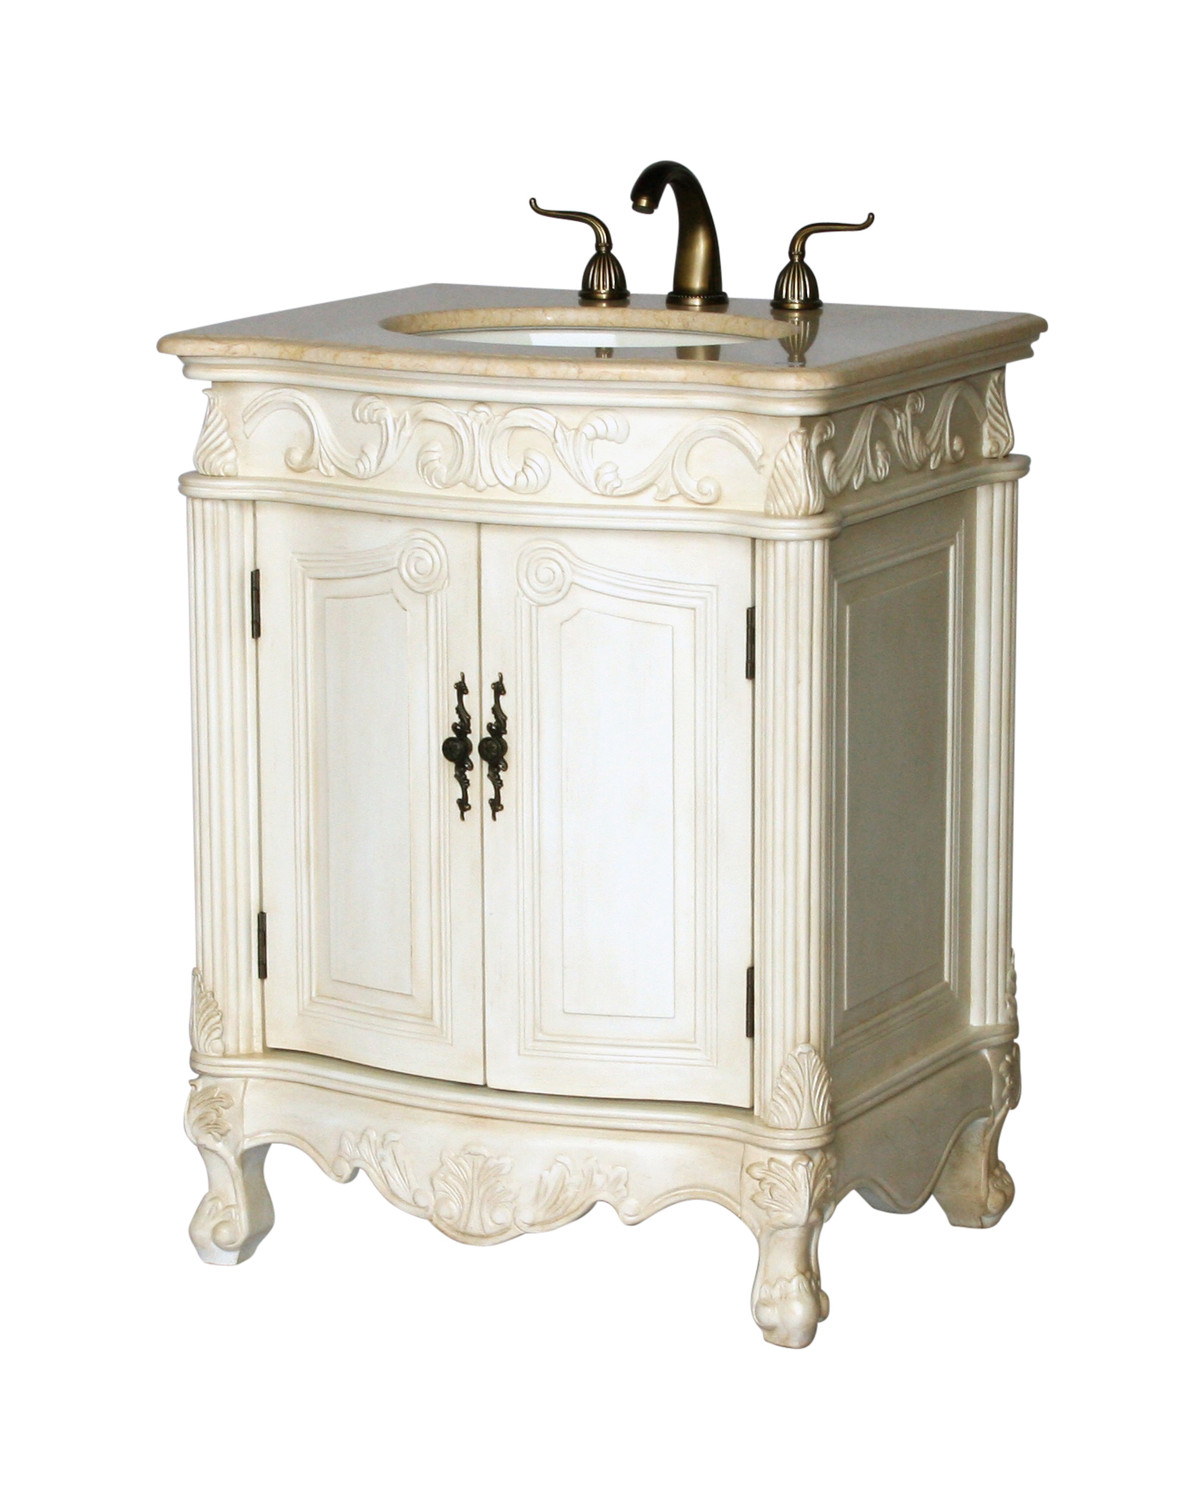 27" Adelina Antique Single Sink Bathroom Vanity in White Finish